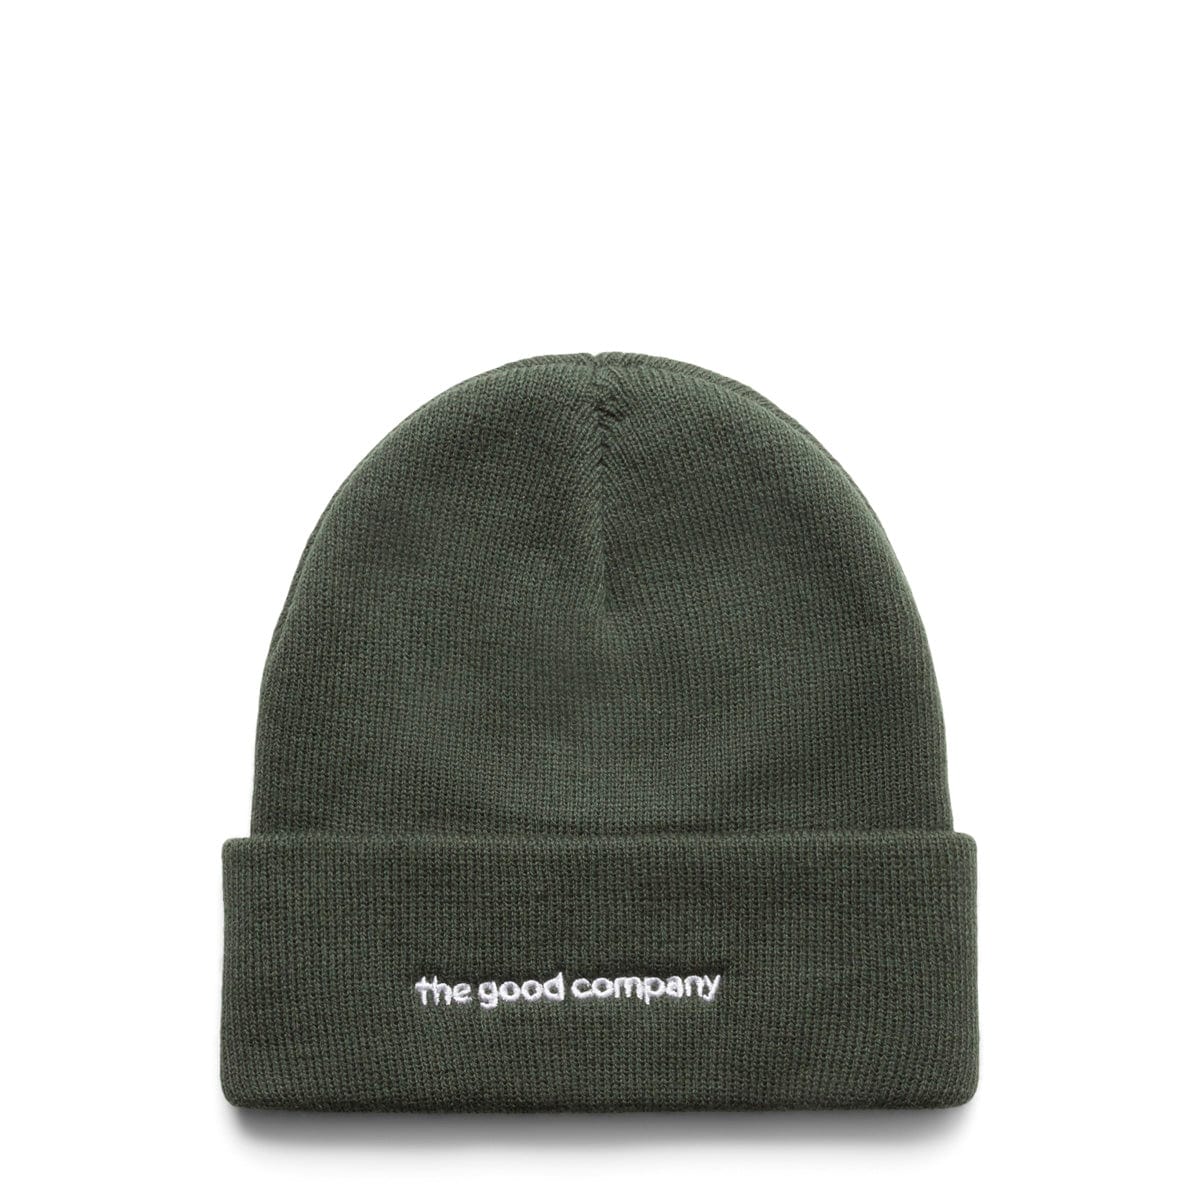 The Good Company Headwear GREEN / O/S BEAR BEANIE